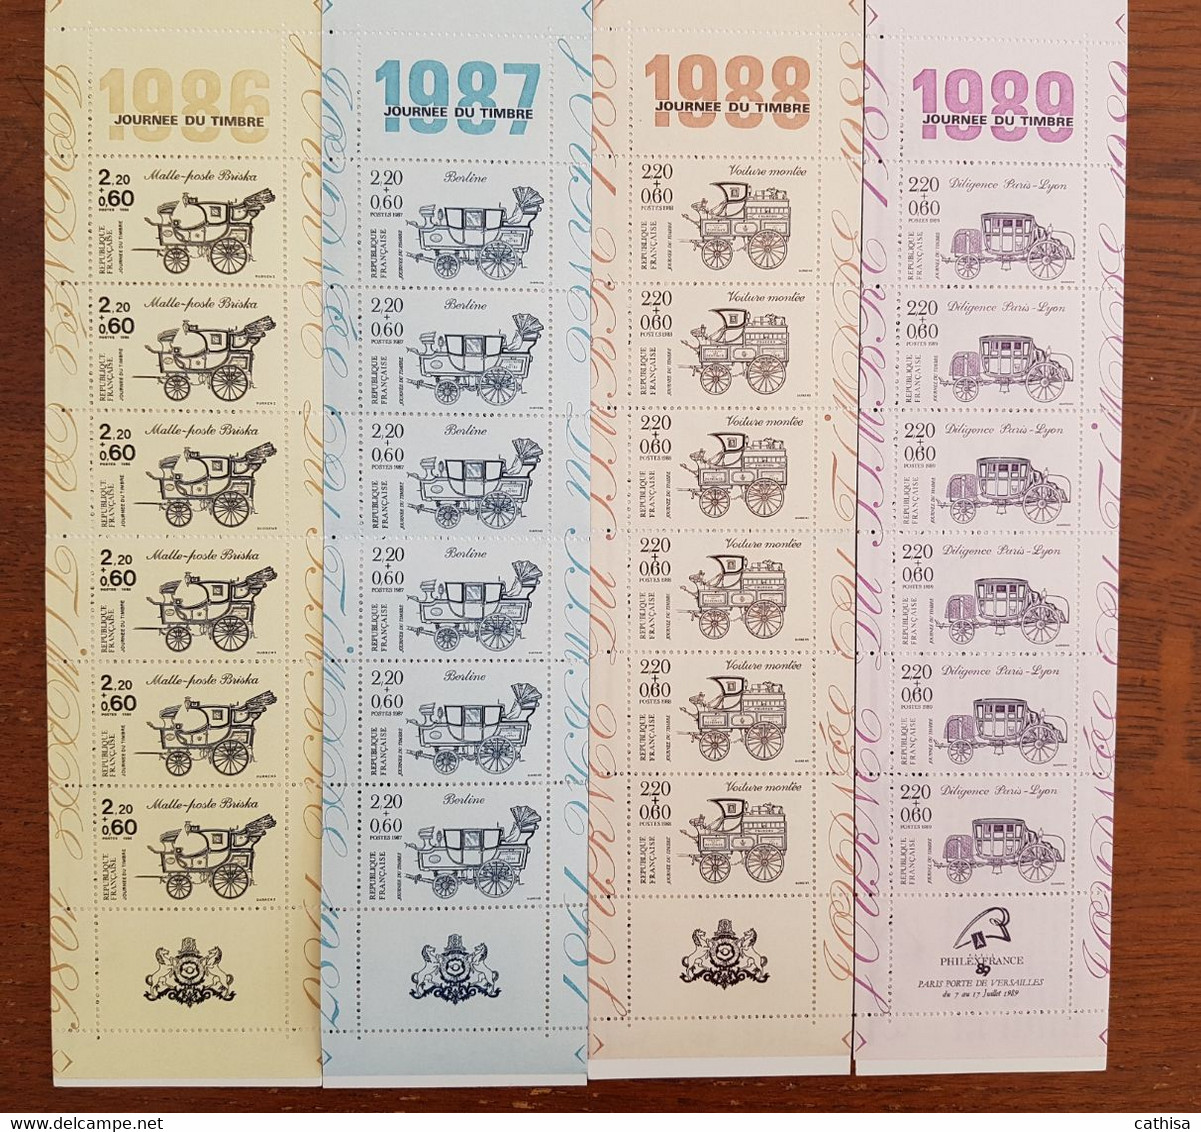 Carnets Journée Du Timbre 1986 1987 1988 1989 - Stamp Day